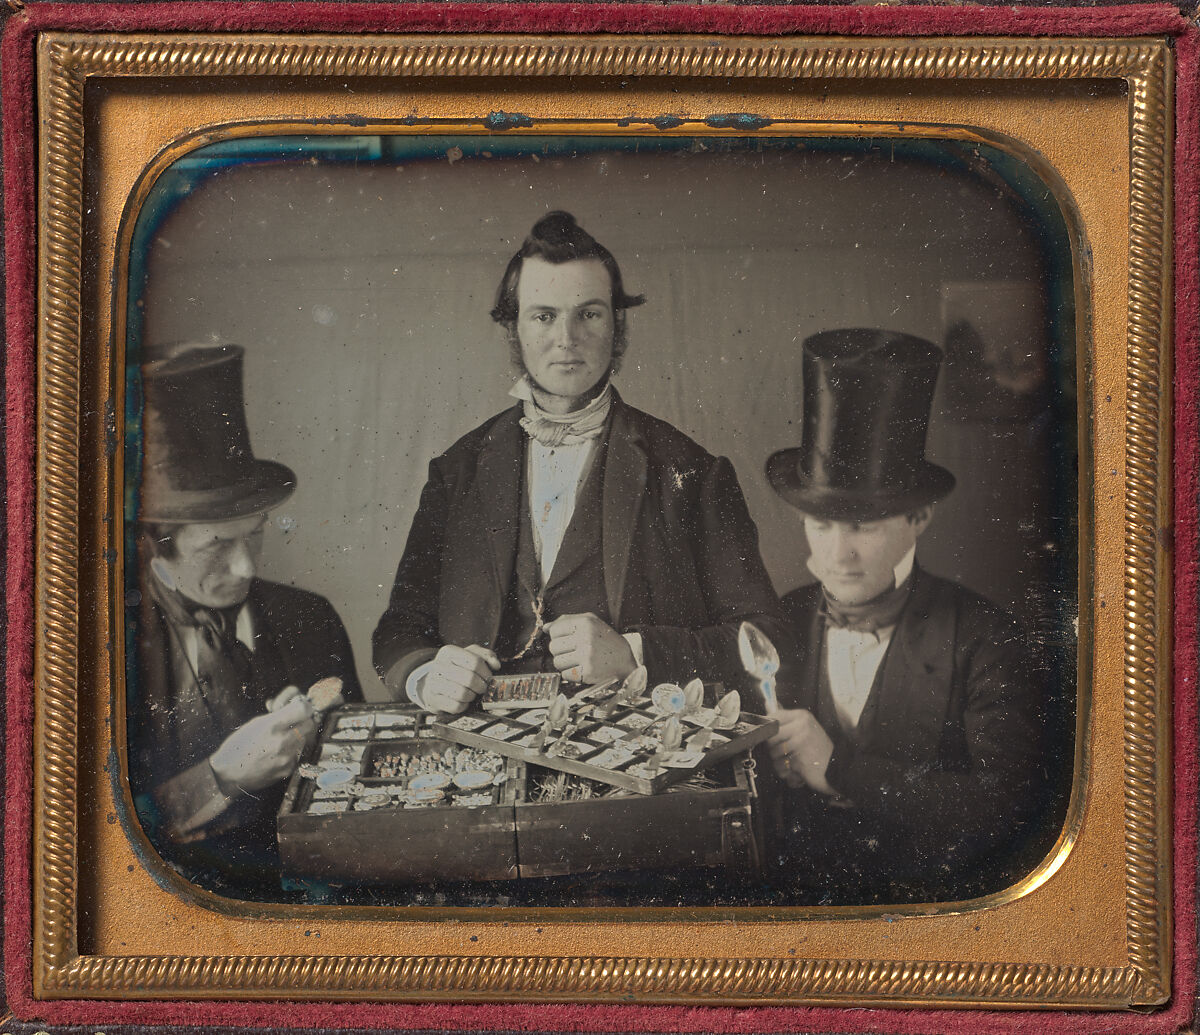 The Silver Merchants, Unknown, Daguerreotype